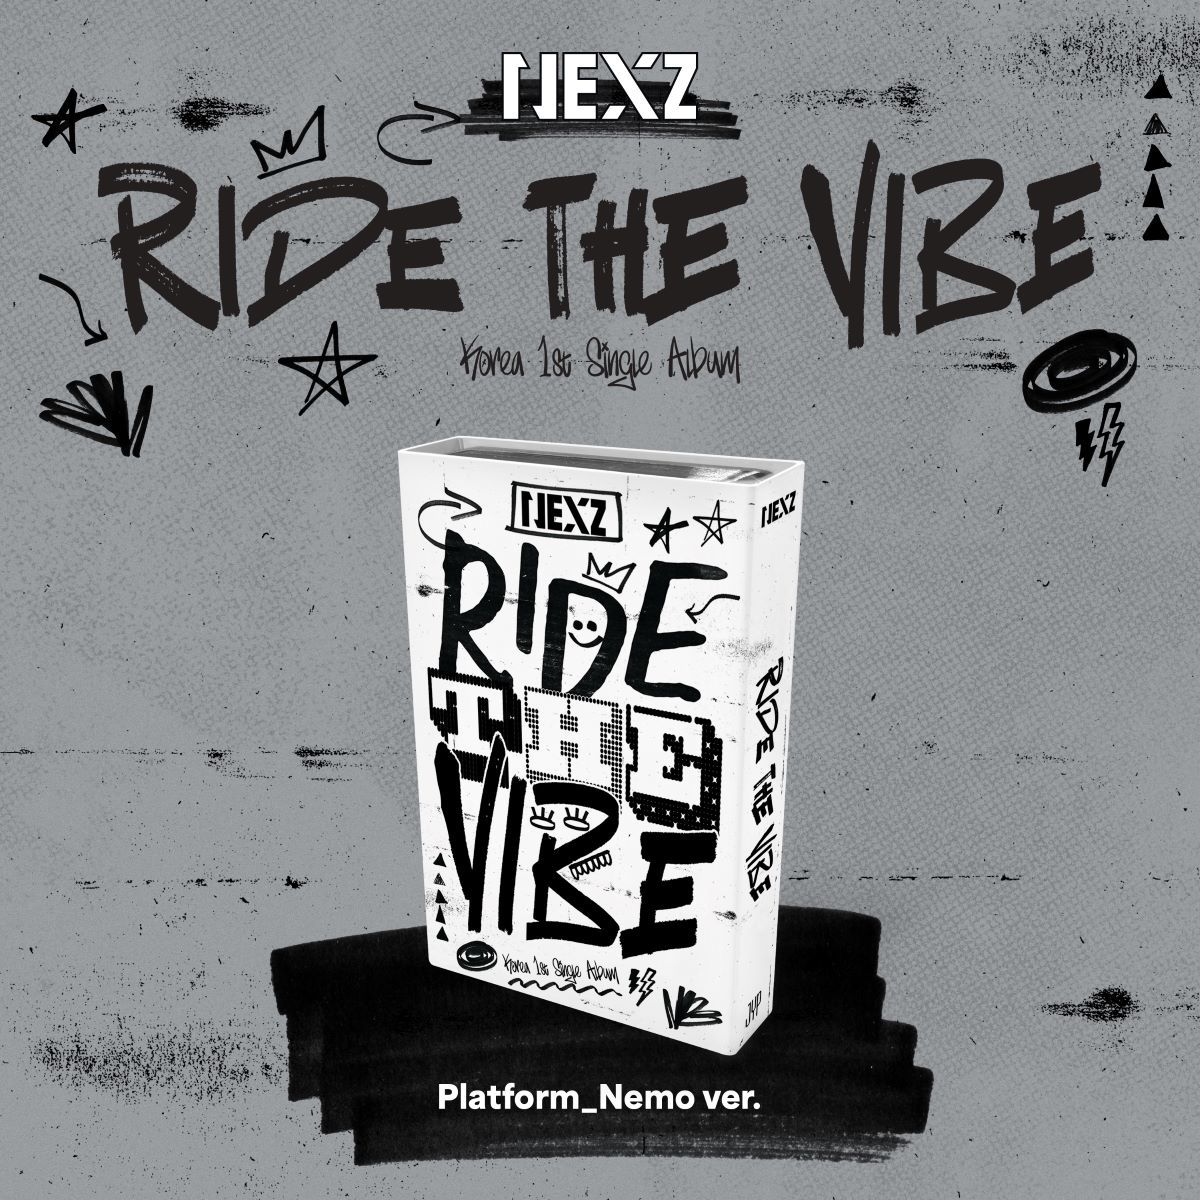 NEXZ Ride the Vibe 通常盤 アルバム 開封済み トレカなし ① 【特別訳あり特価】 - K-POP・アジア